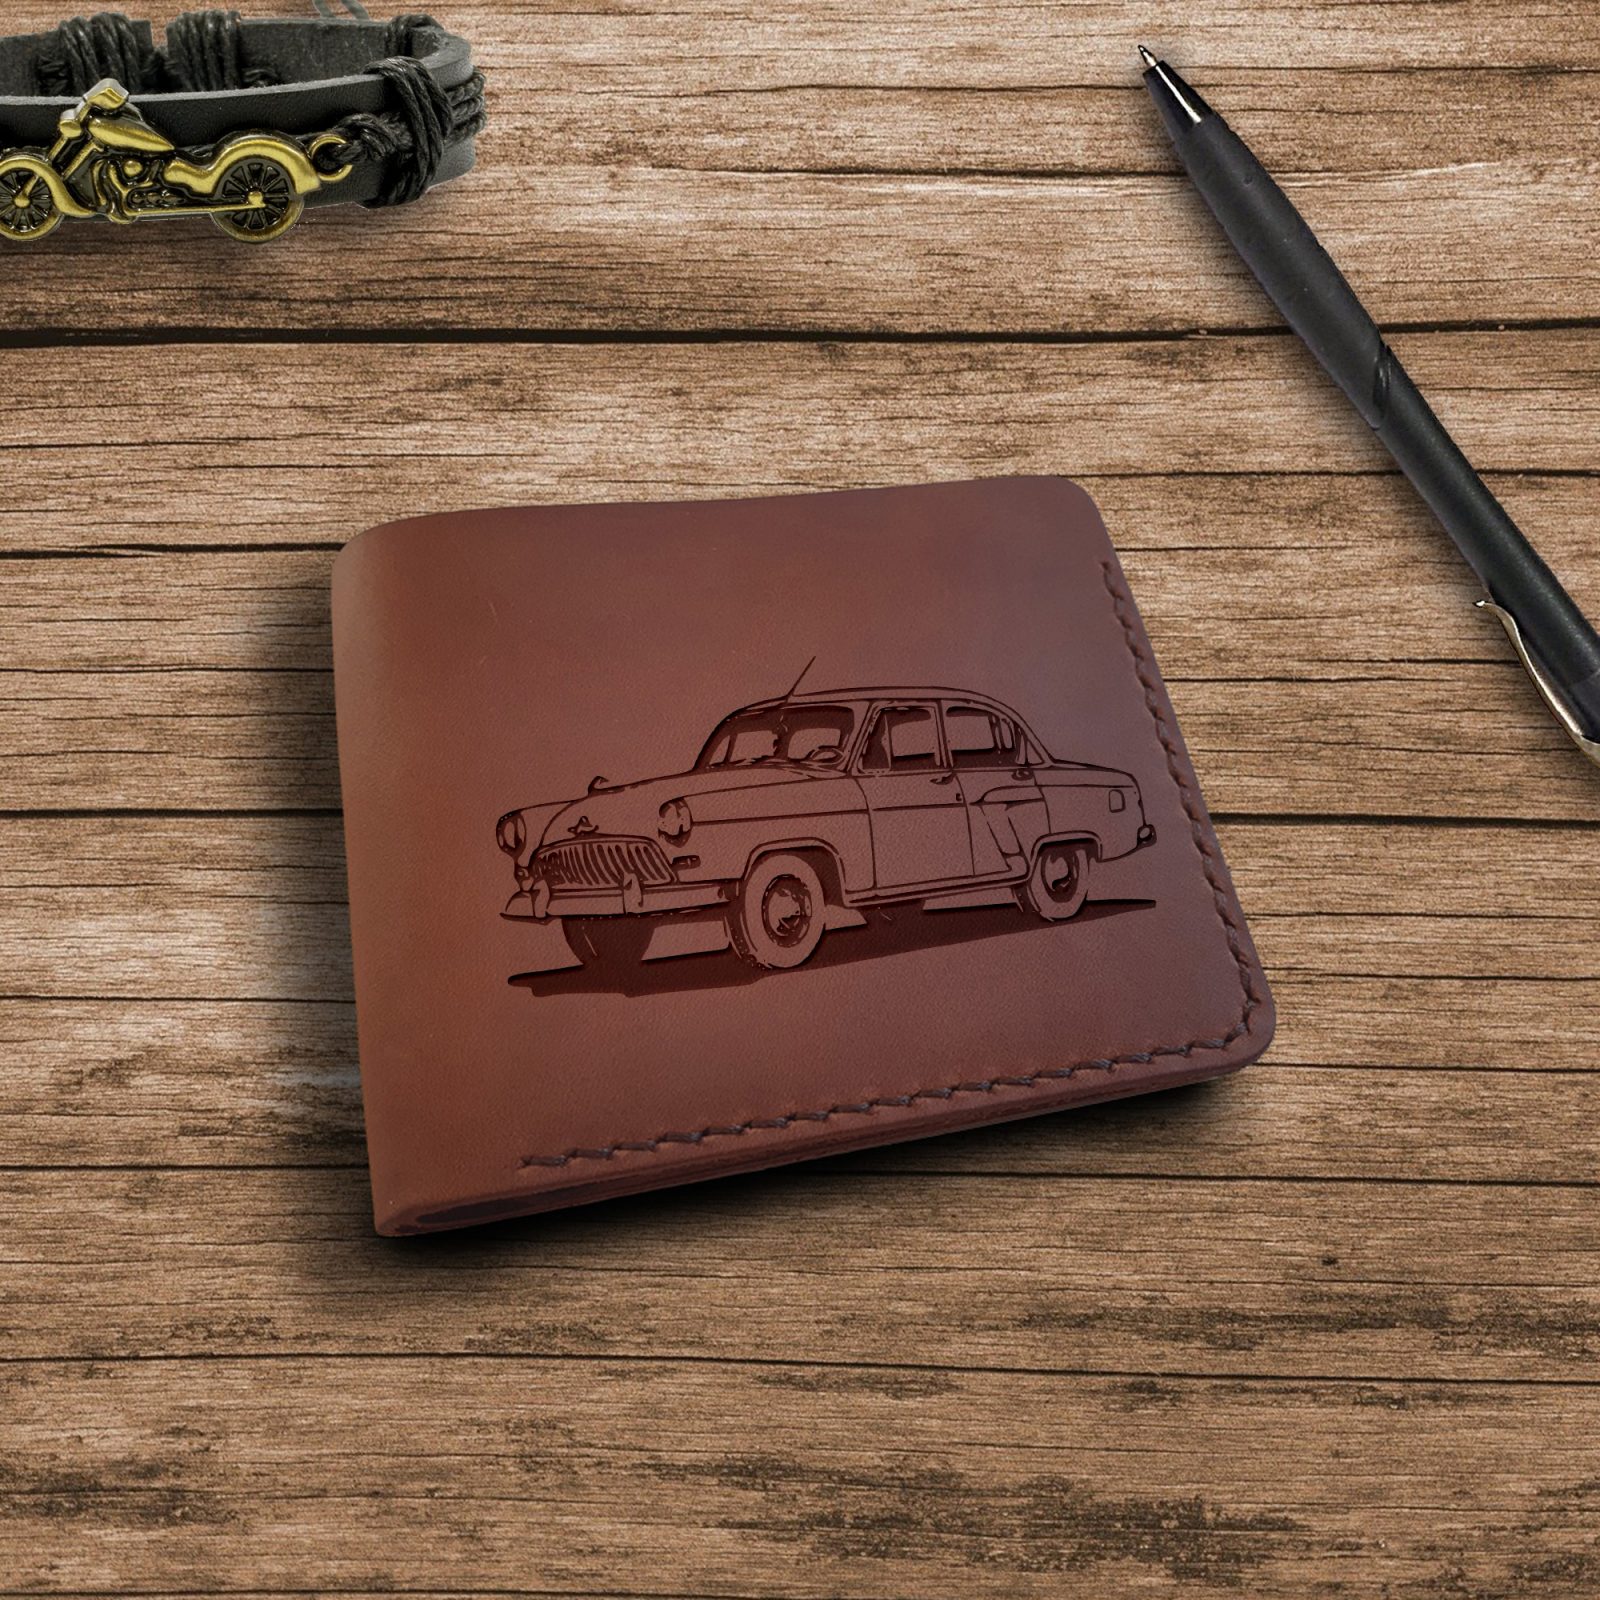 Engraved Wallet Men Handwriting Wallet Personalized Leather -    Engraved wallet men, Personalized leather wallet, Engraved wallet